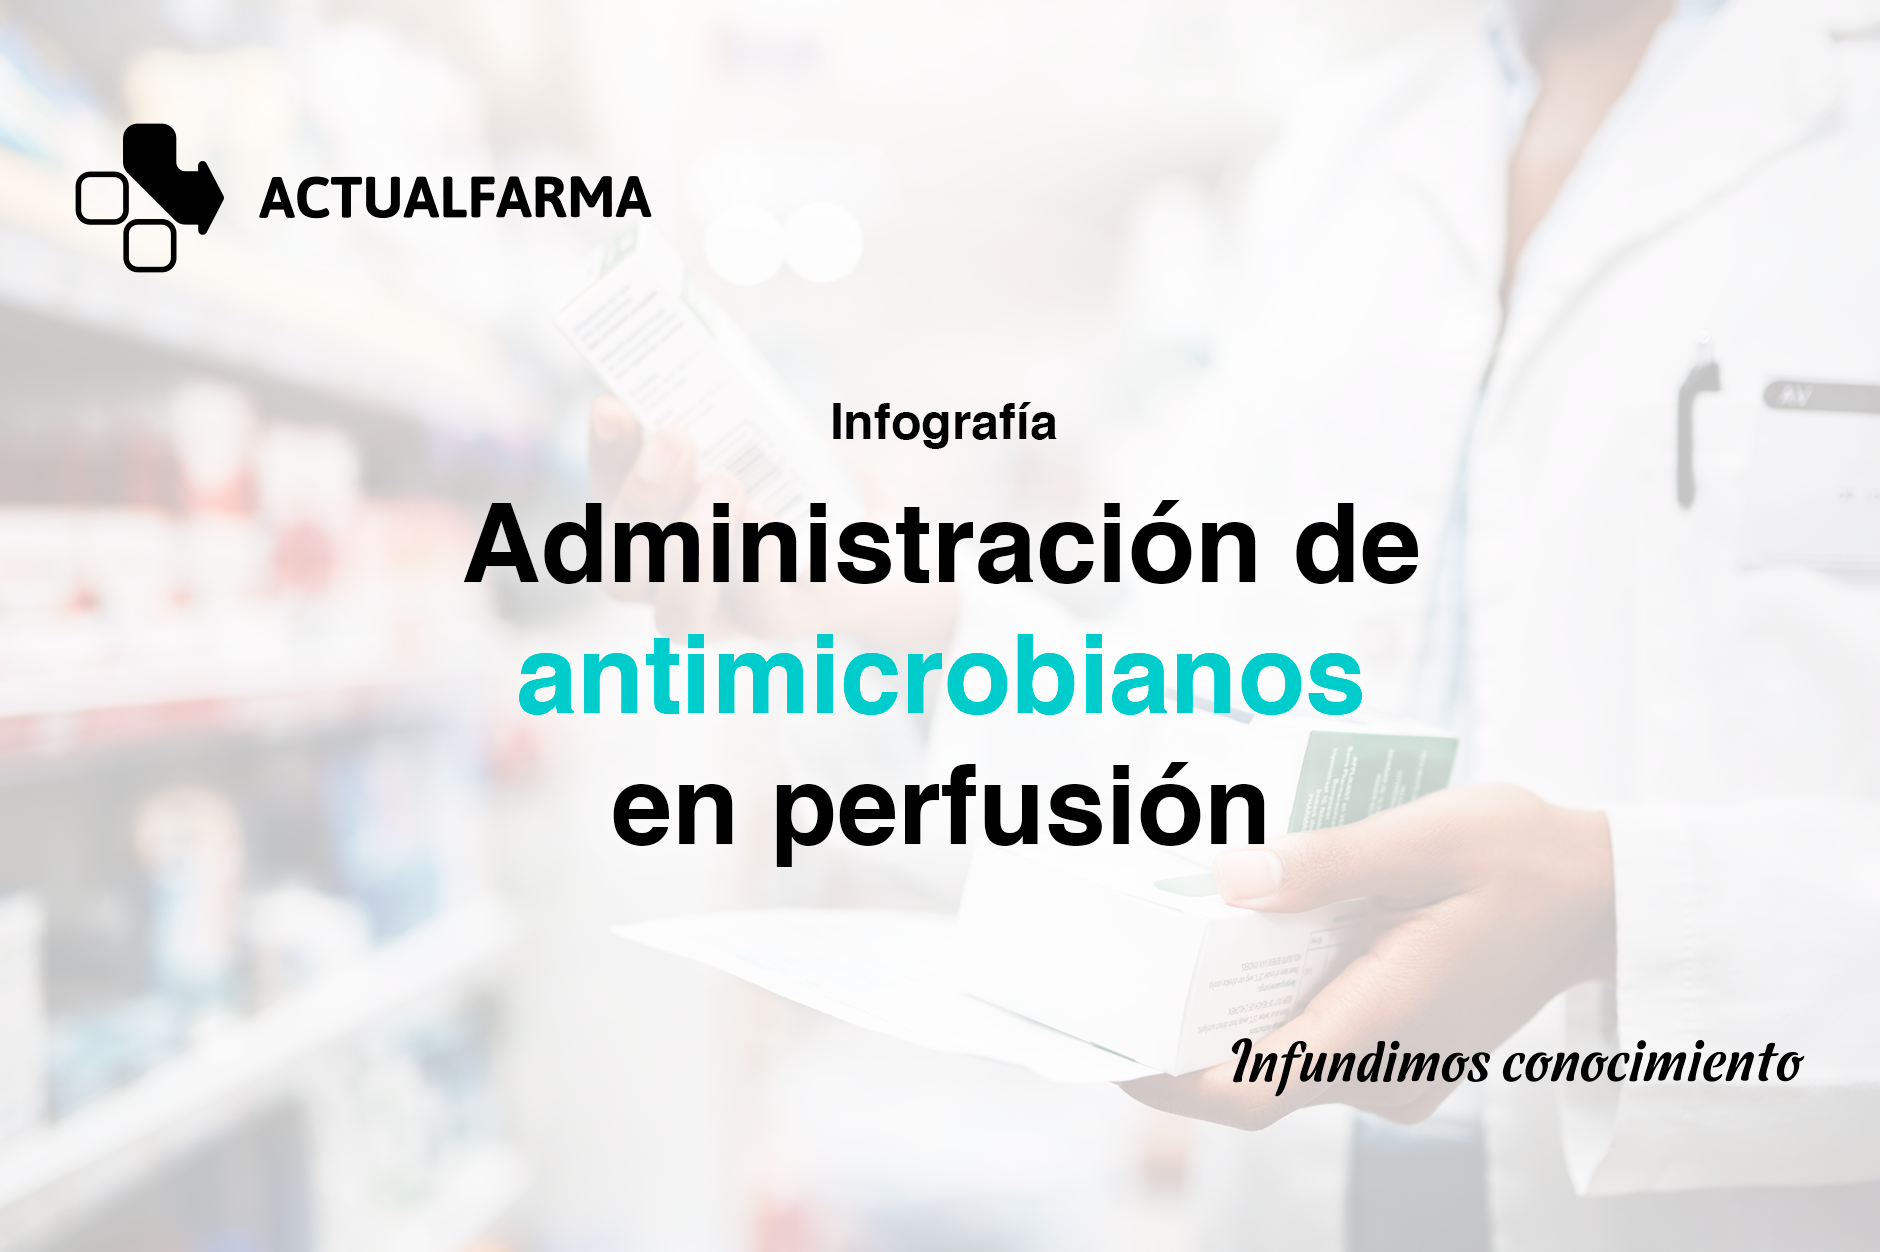 Administración adecuada de antimicrobianos